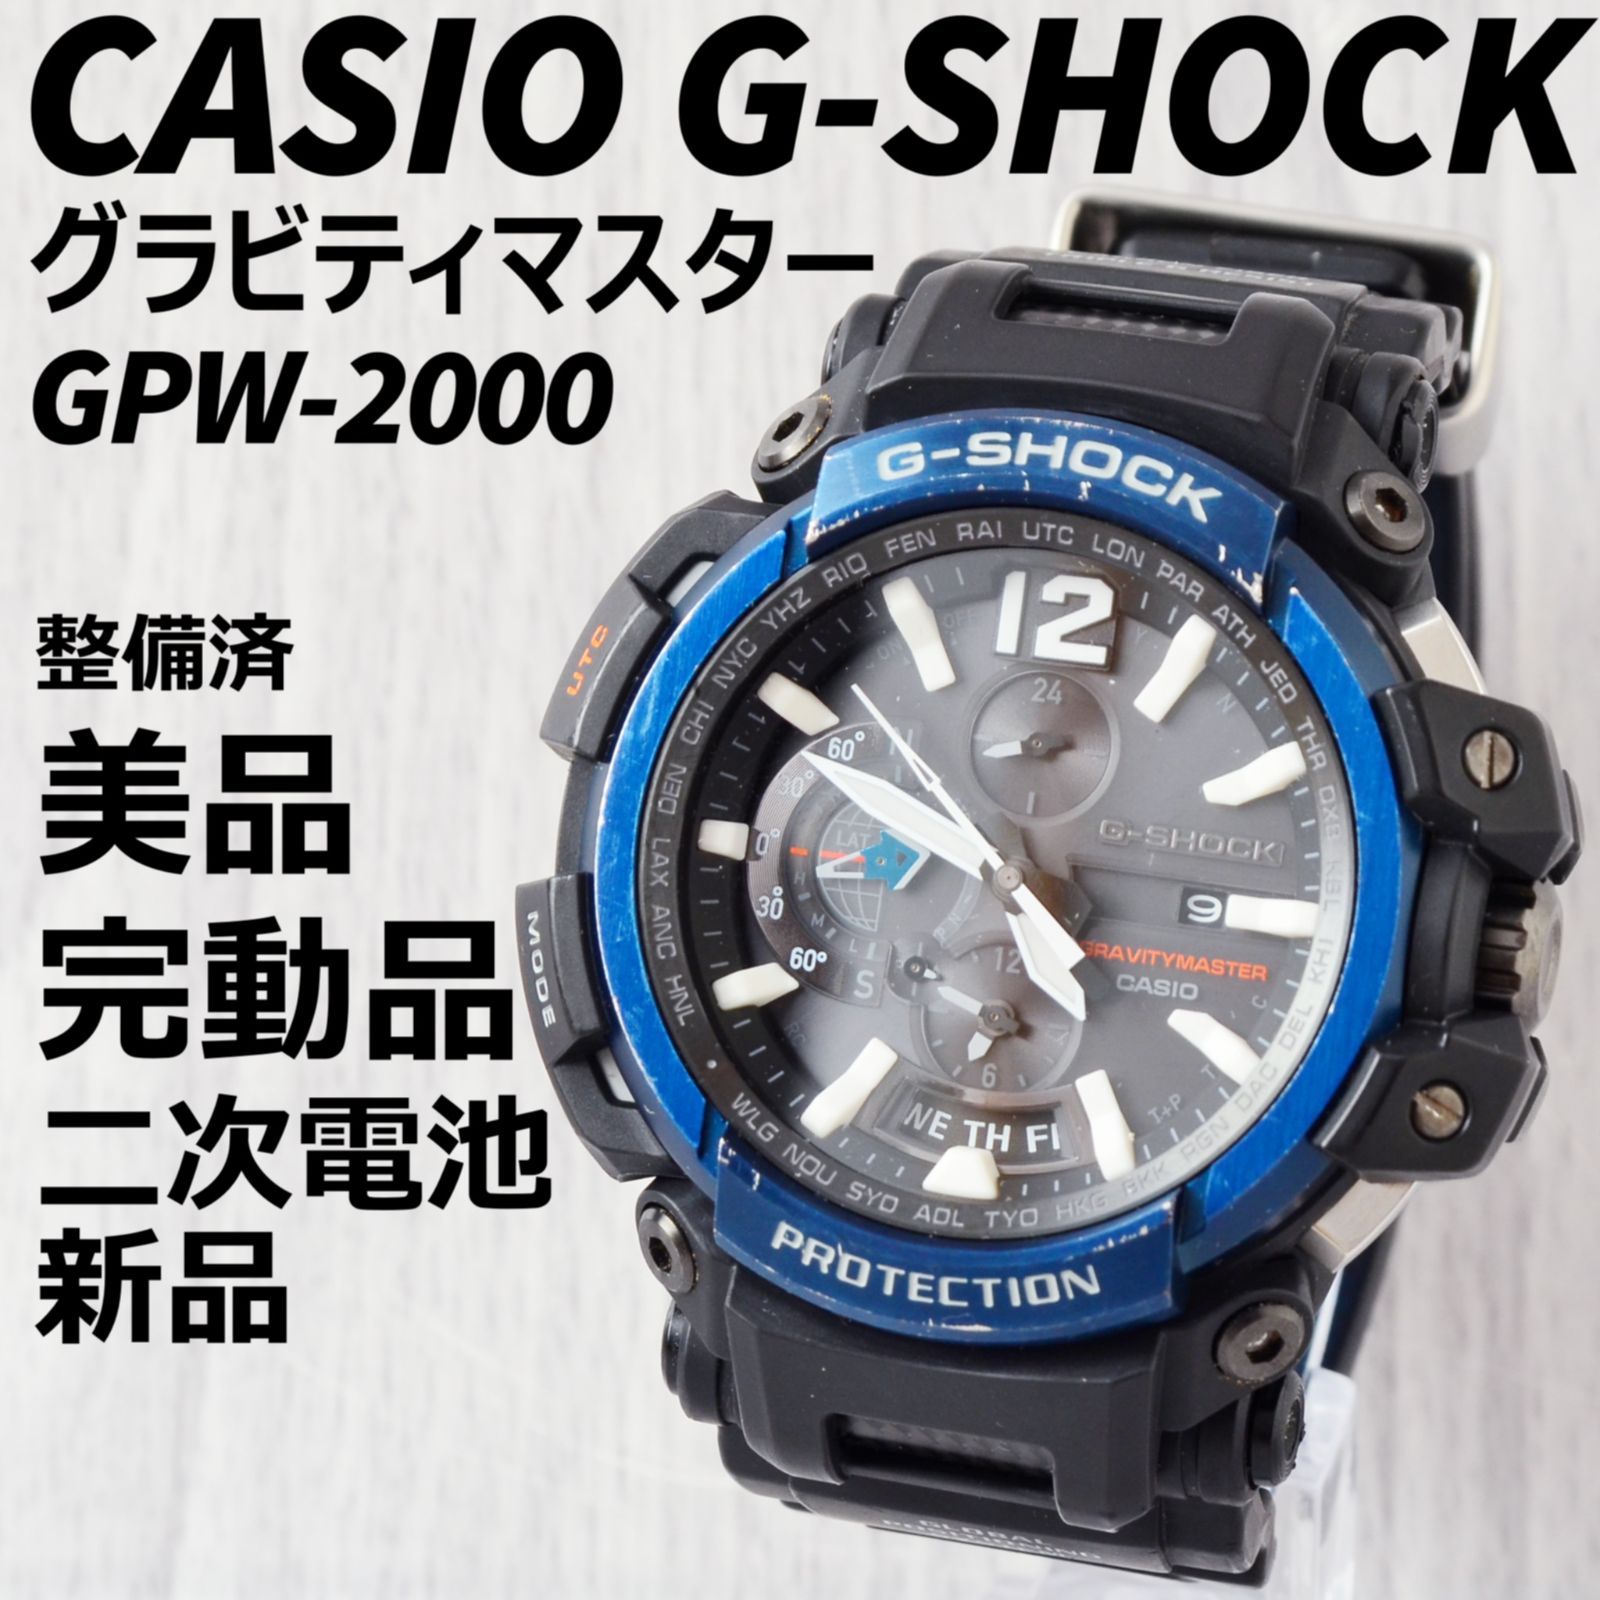 CASIO G-SHOCK GPW-2000 グラビティマスター 二次電池新品-